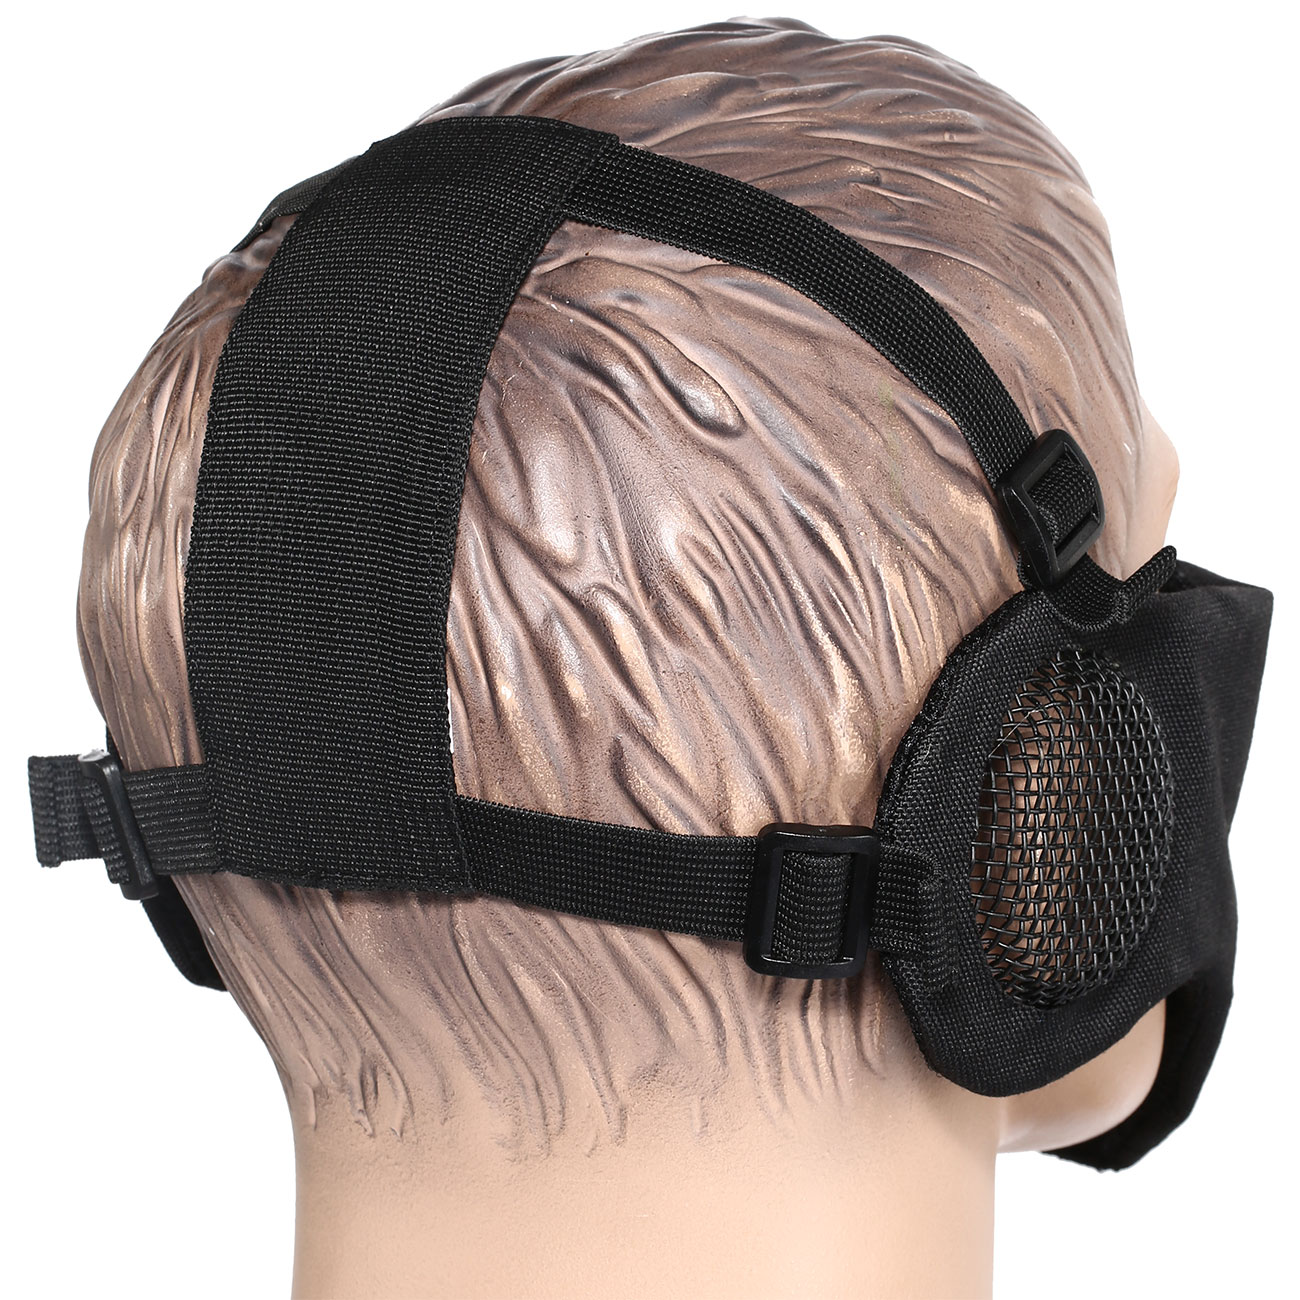 ASG Strike Systems Mesh Mask Gittermaske Full Lower Face mit Ohrabdeckung schwarz Bild 2